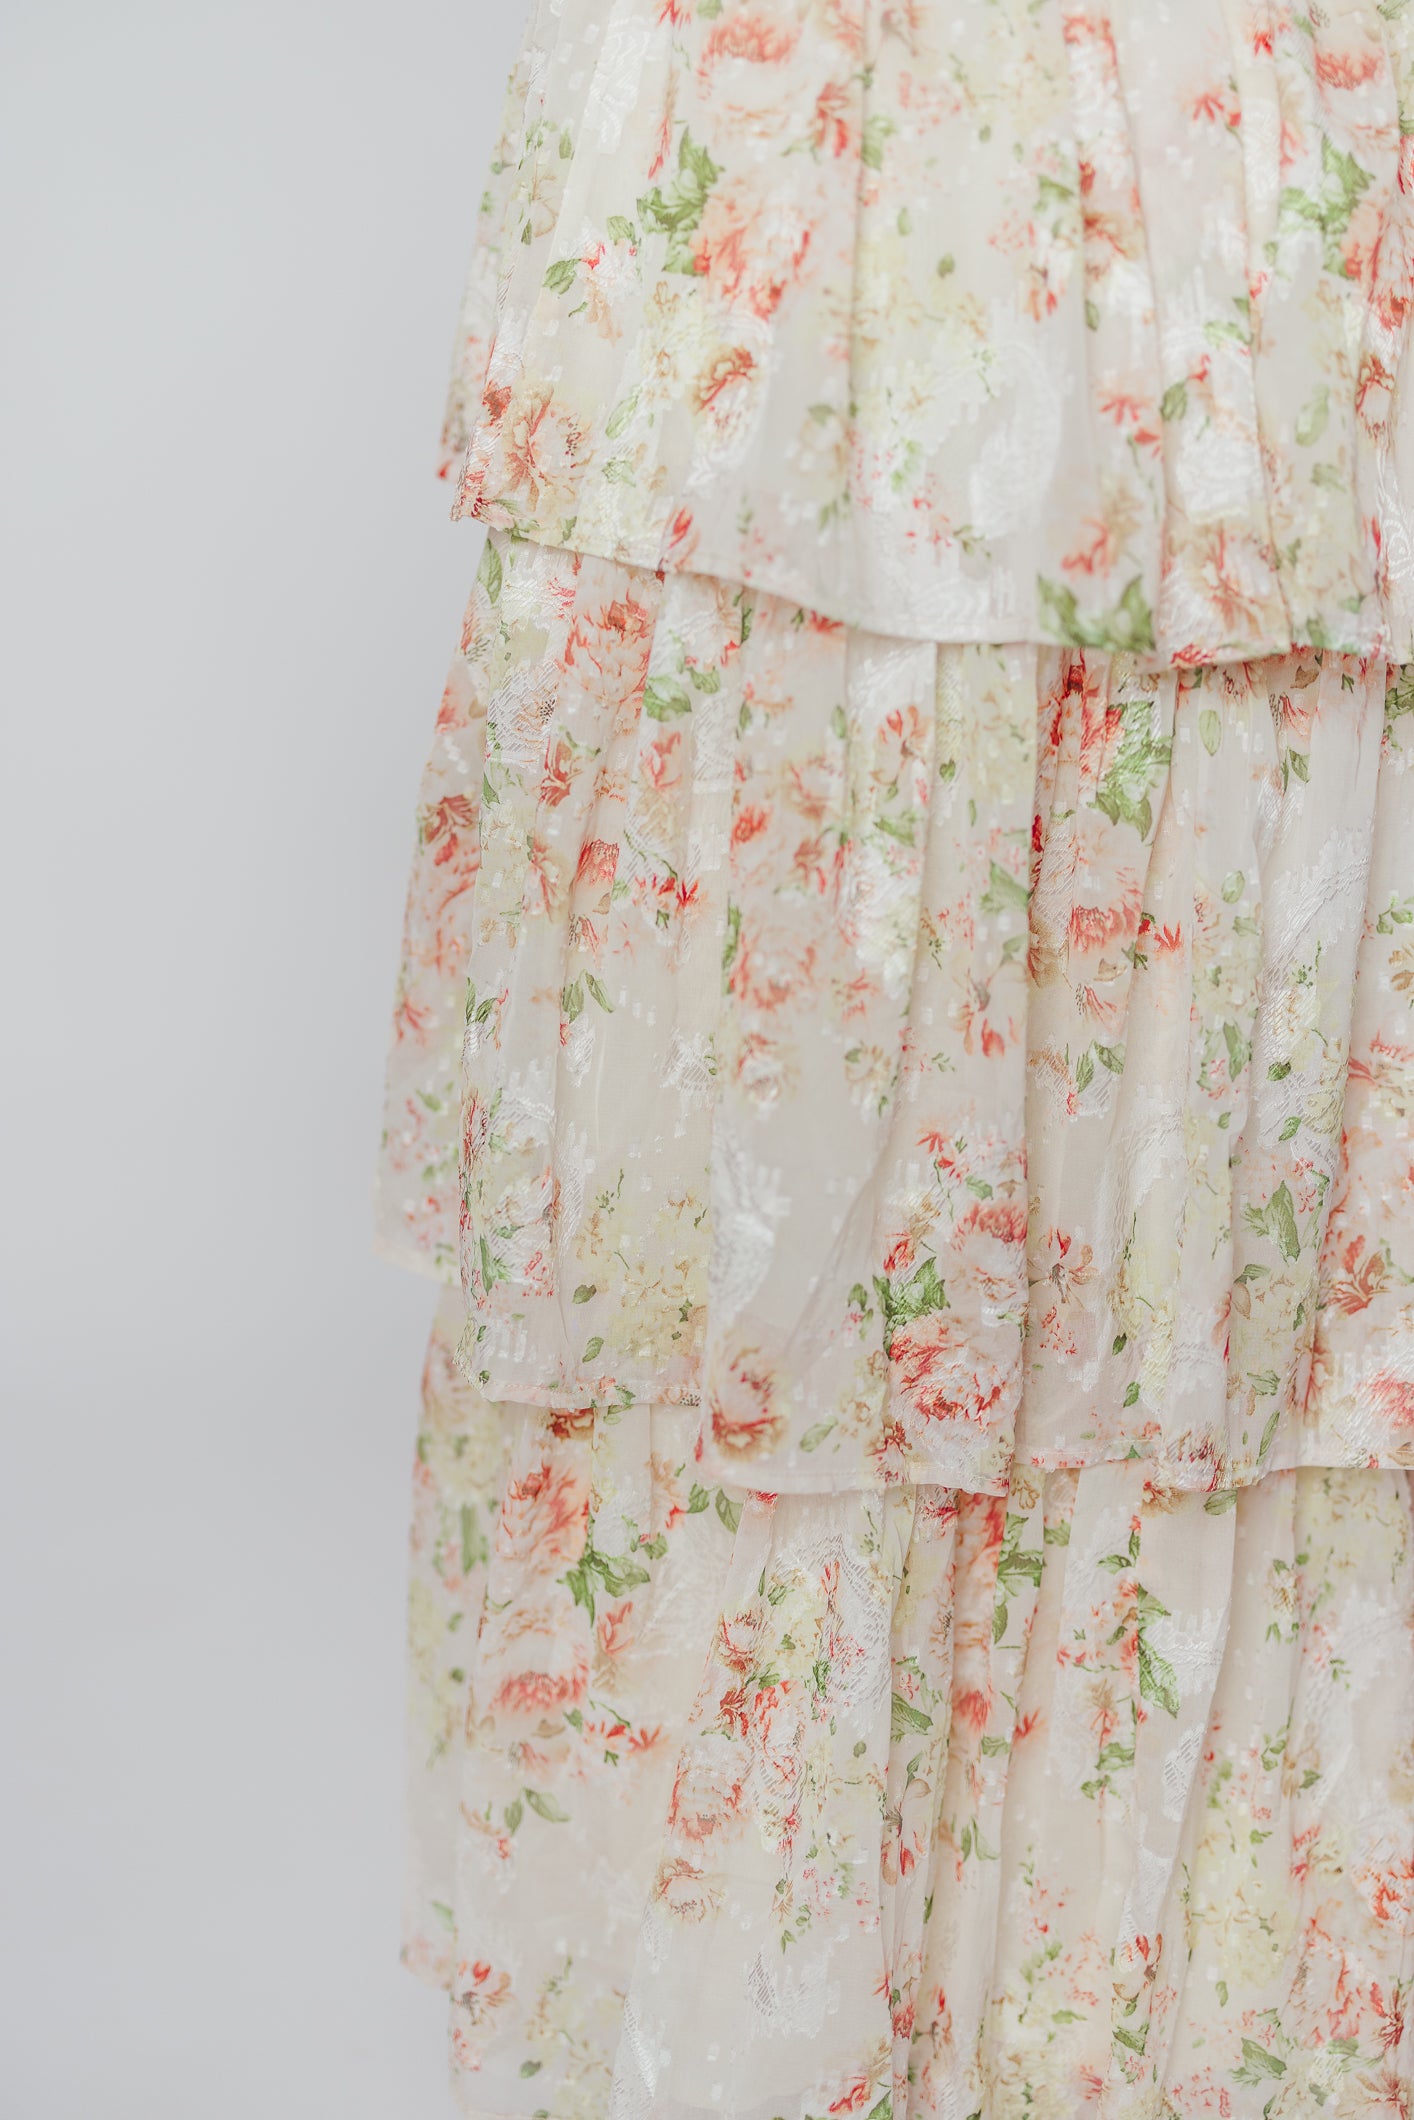 Ingrid Tiered Maxi Dress in Cream Multi Floral